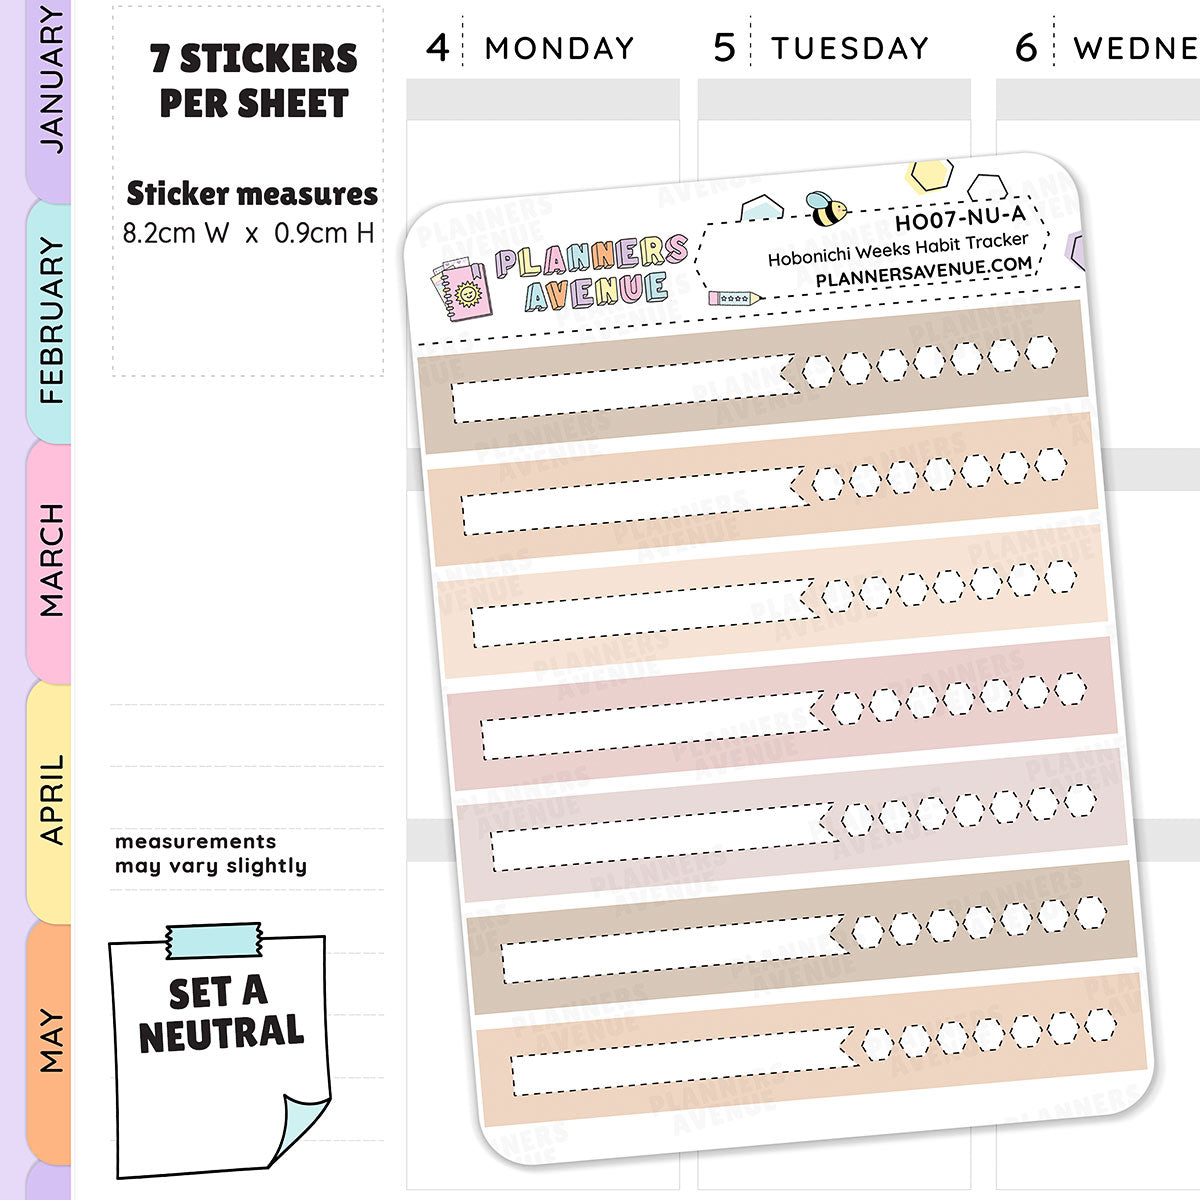 Hobonichi Weeks Habit Tracker Stickers